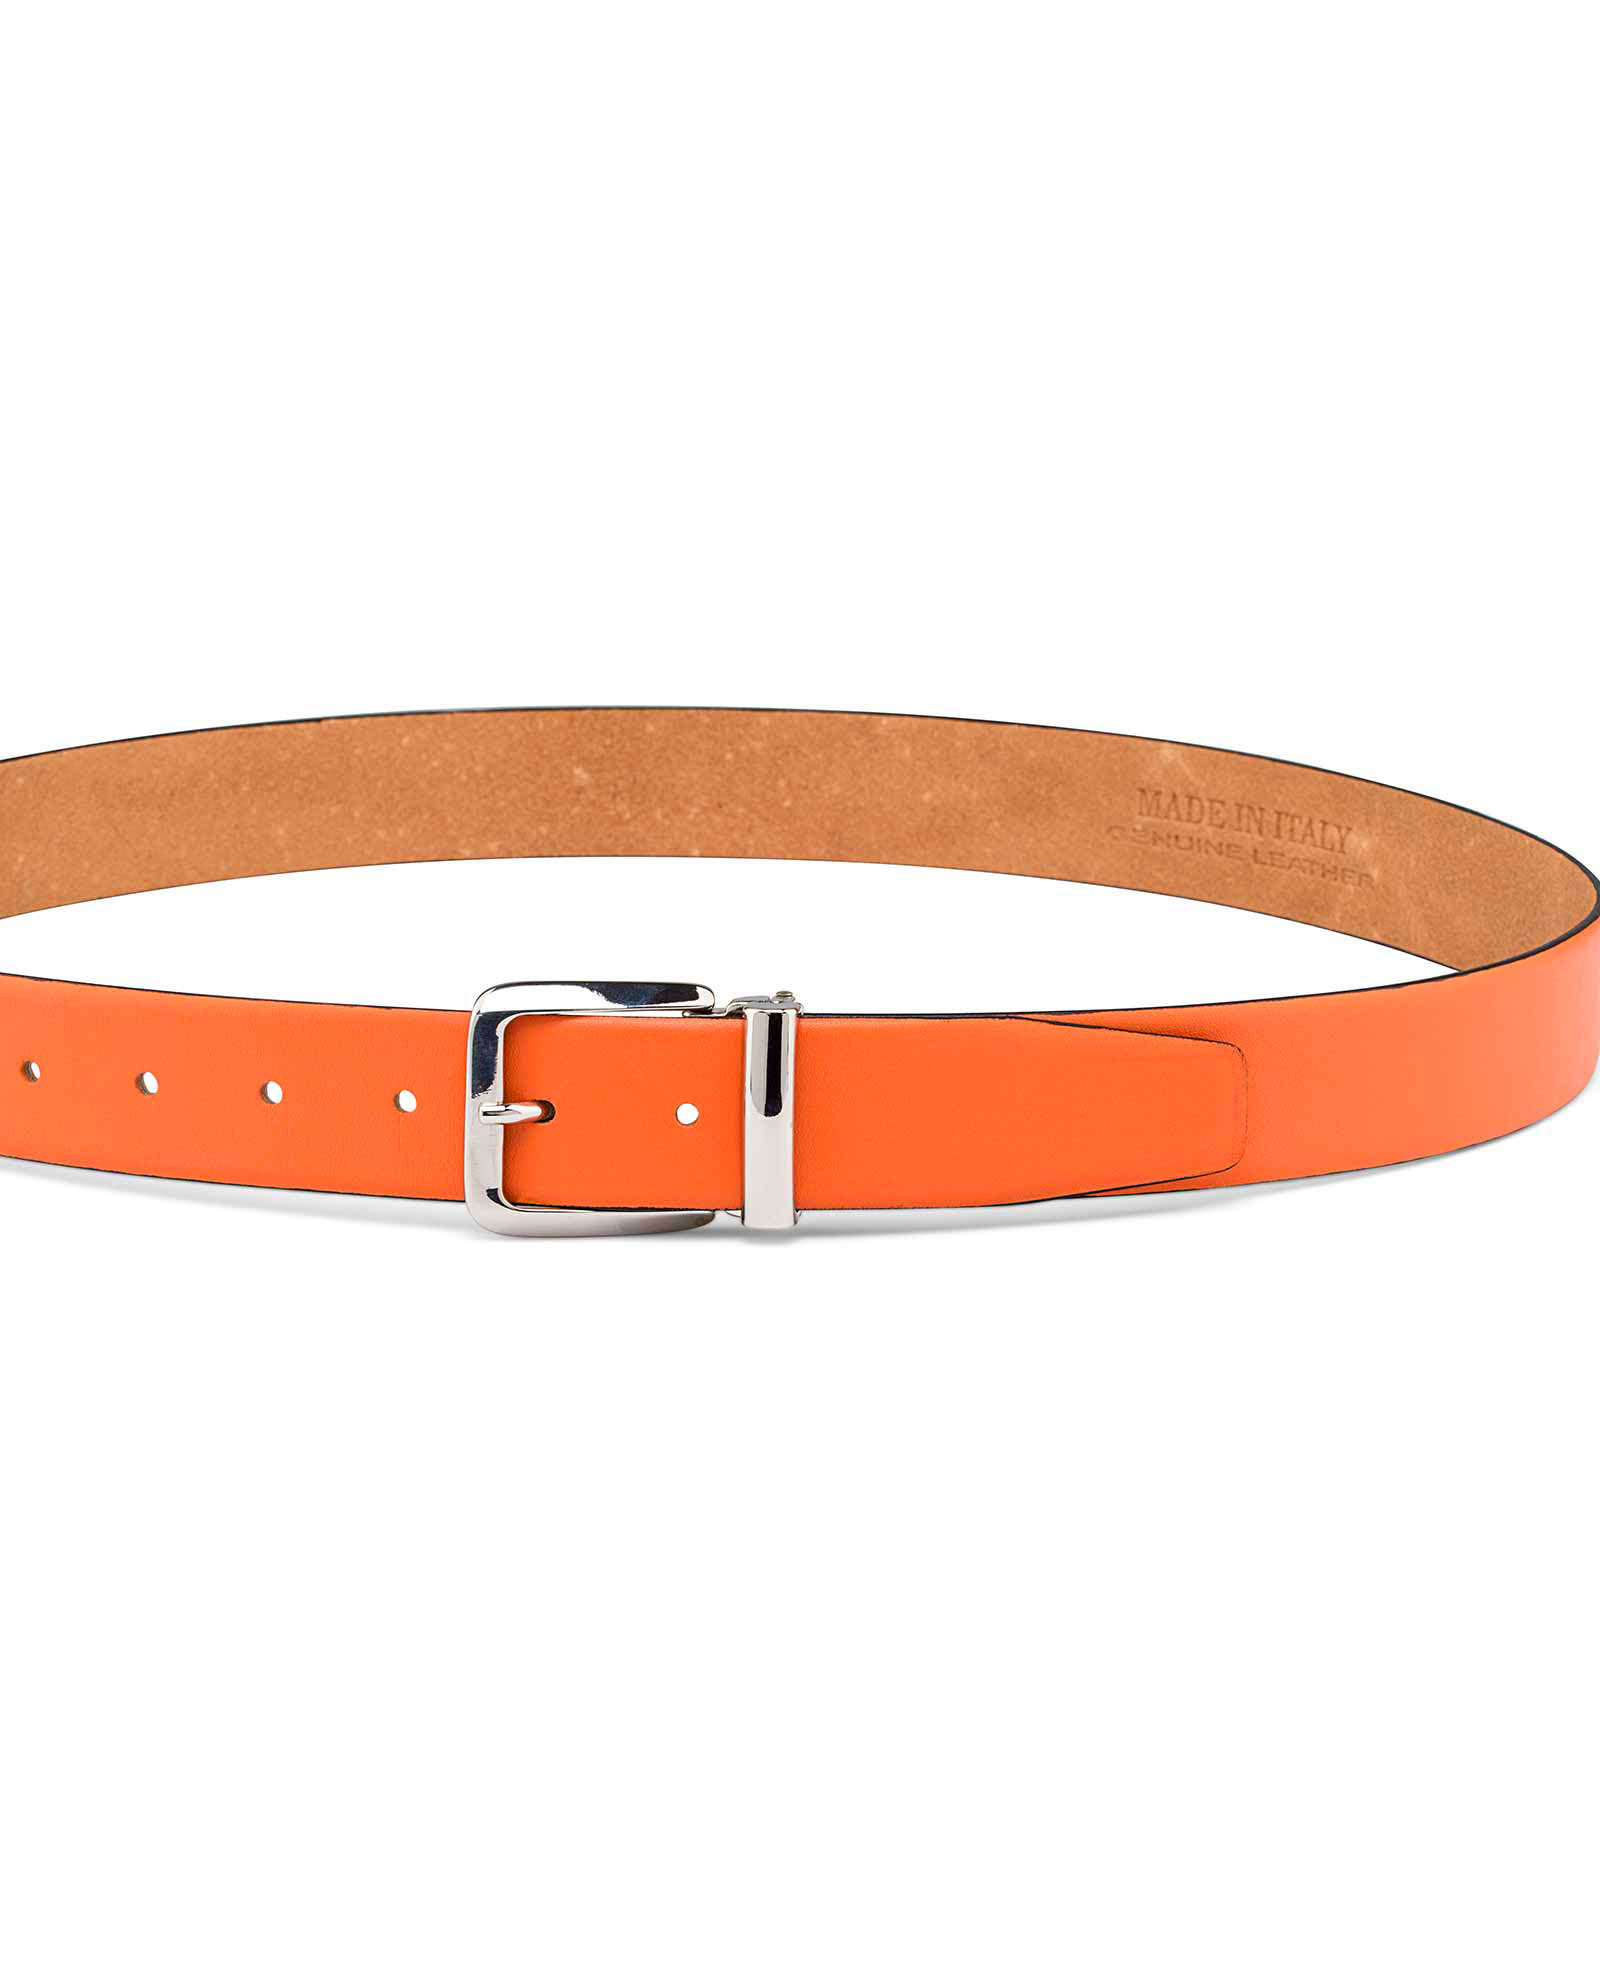 Buy Ladies Orange Belt | LeatherBeltsOnline.com | Ship Free Worldwide